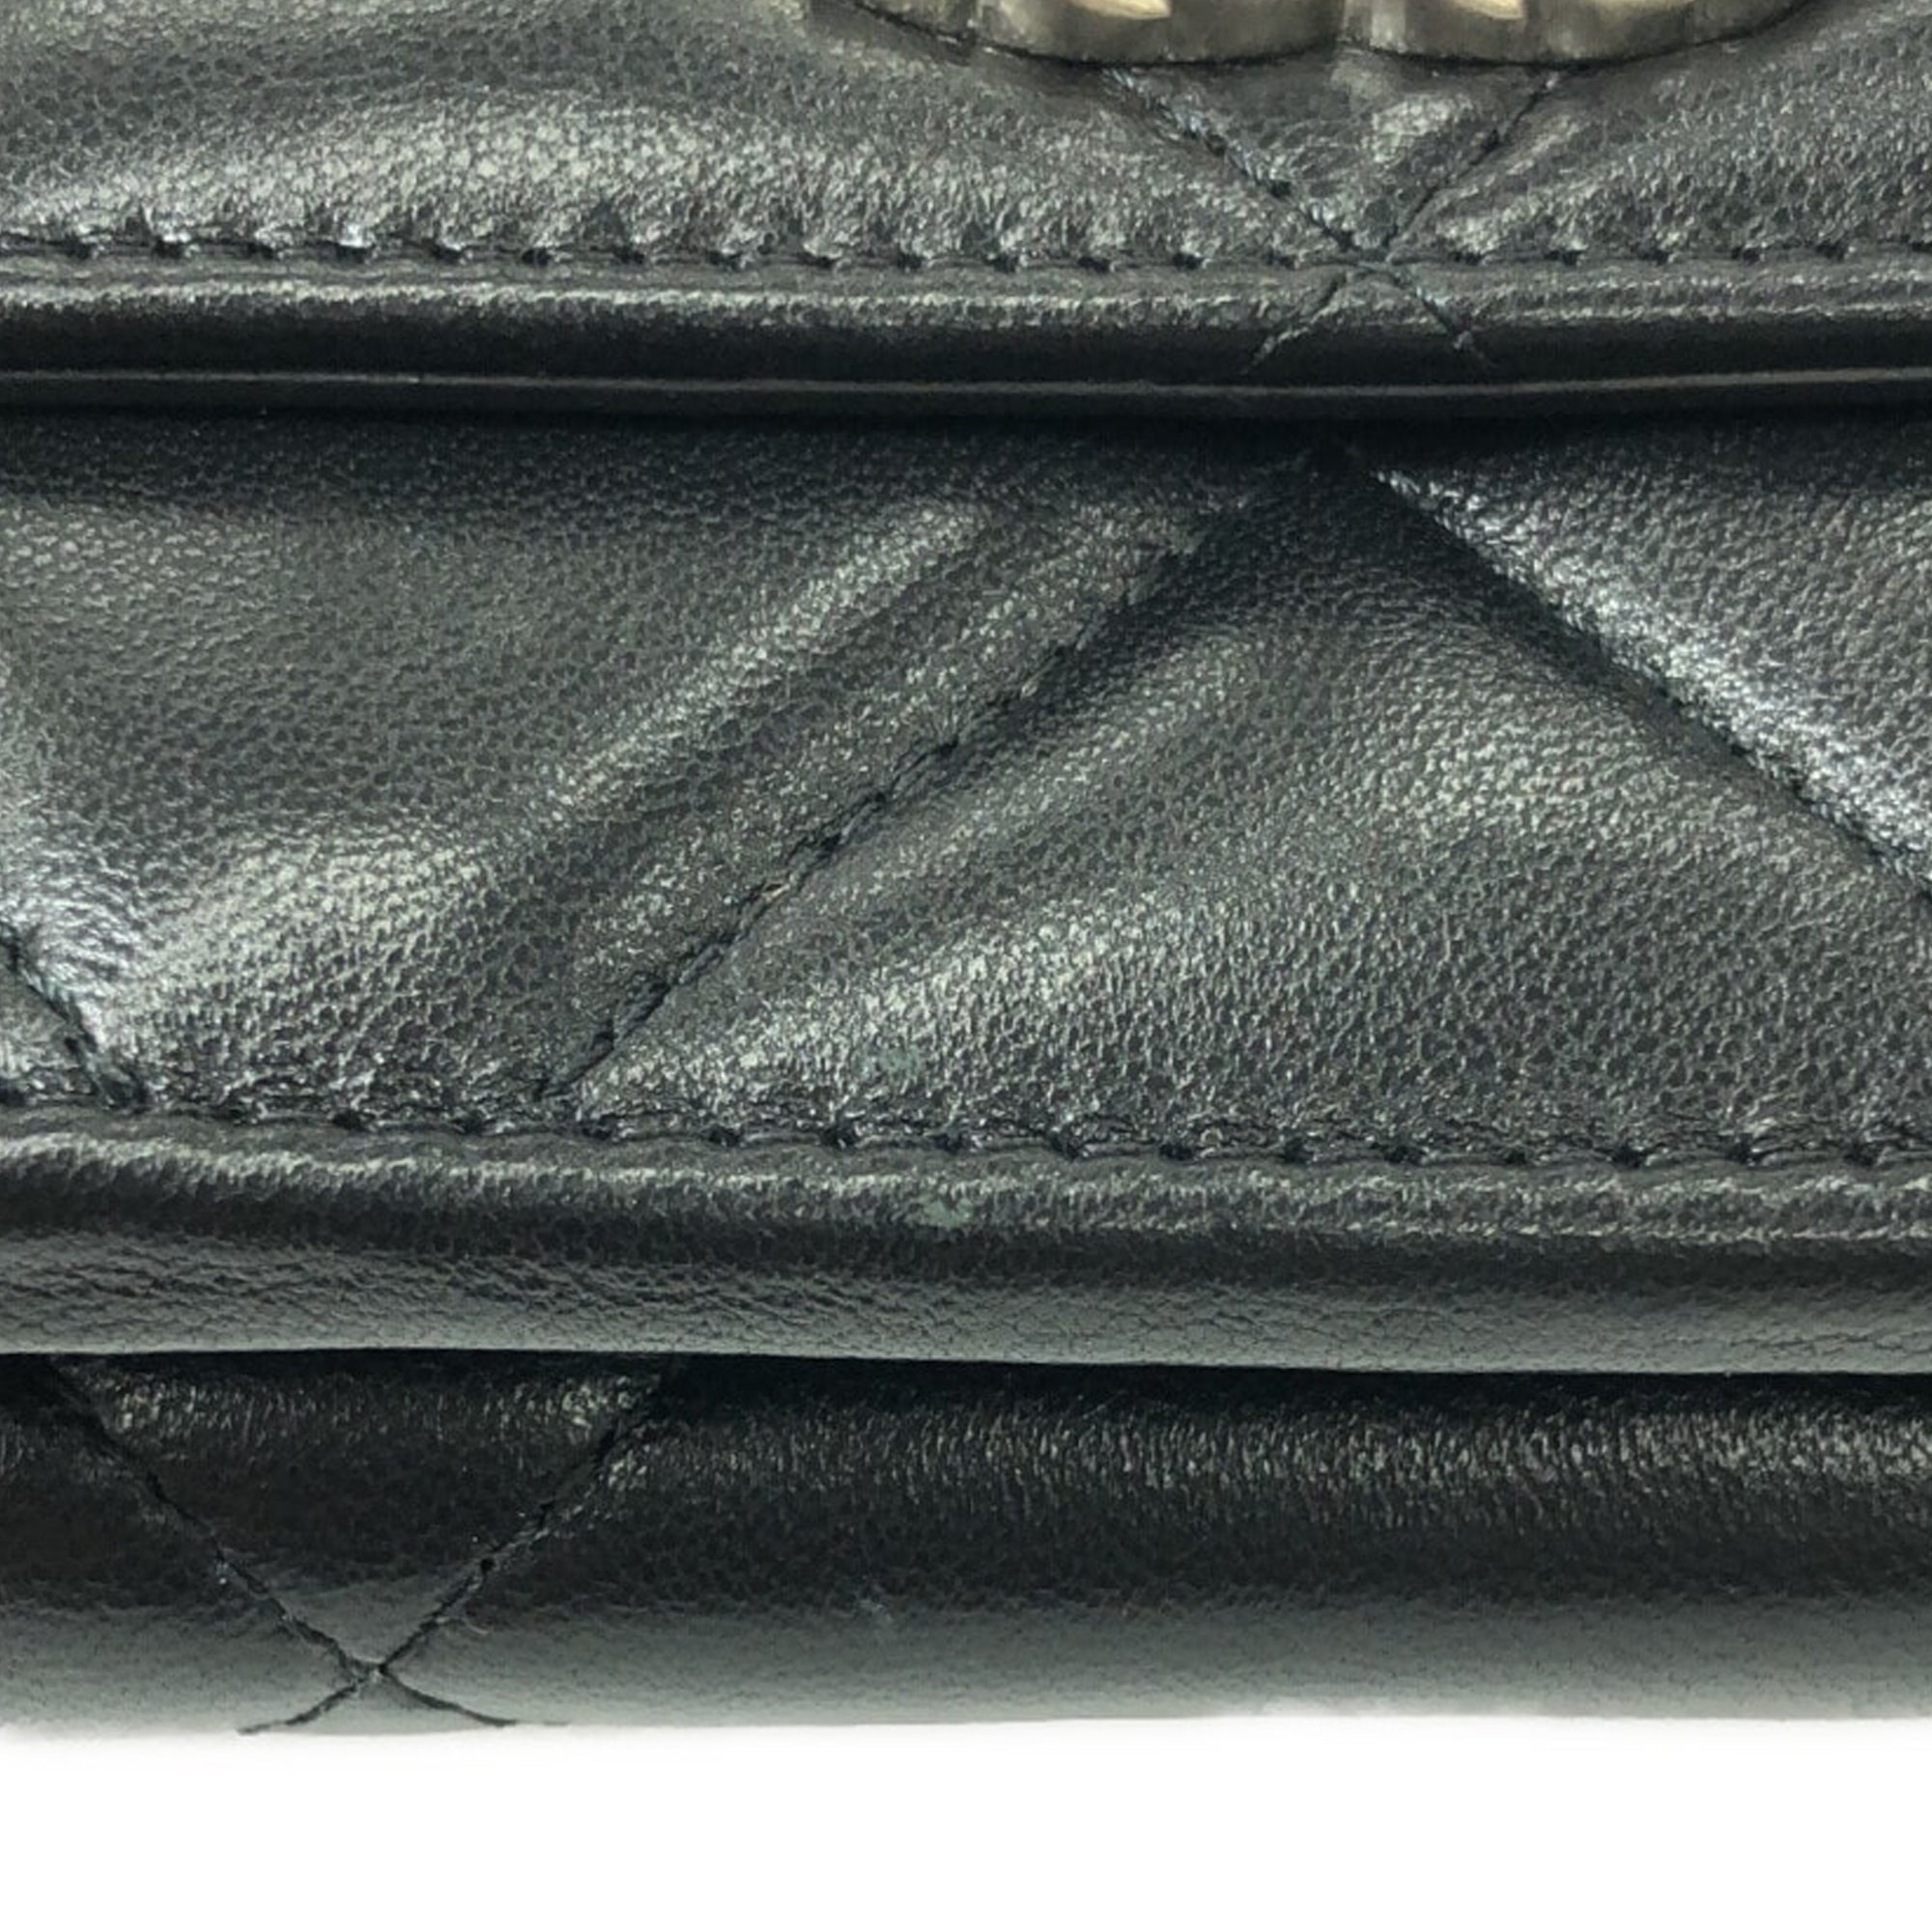 chanel handbag black